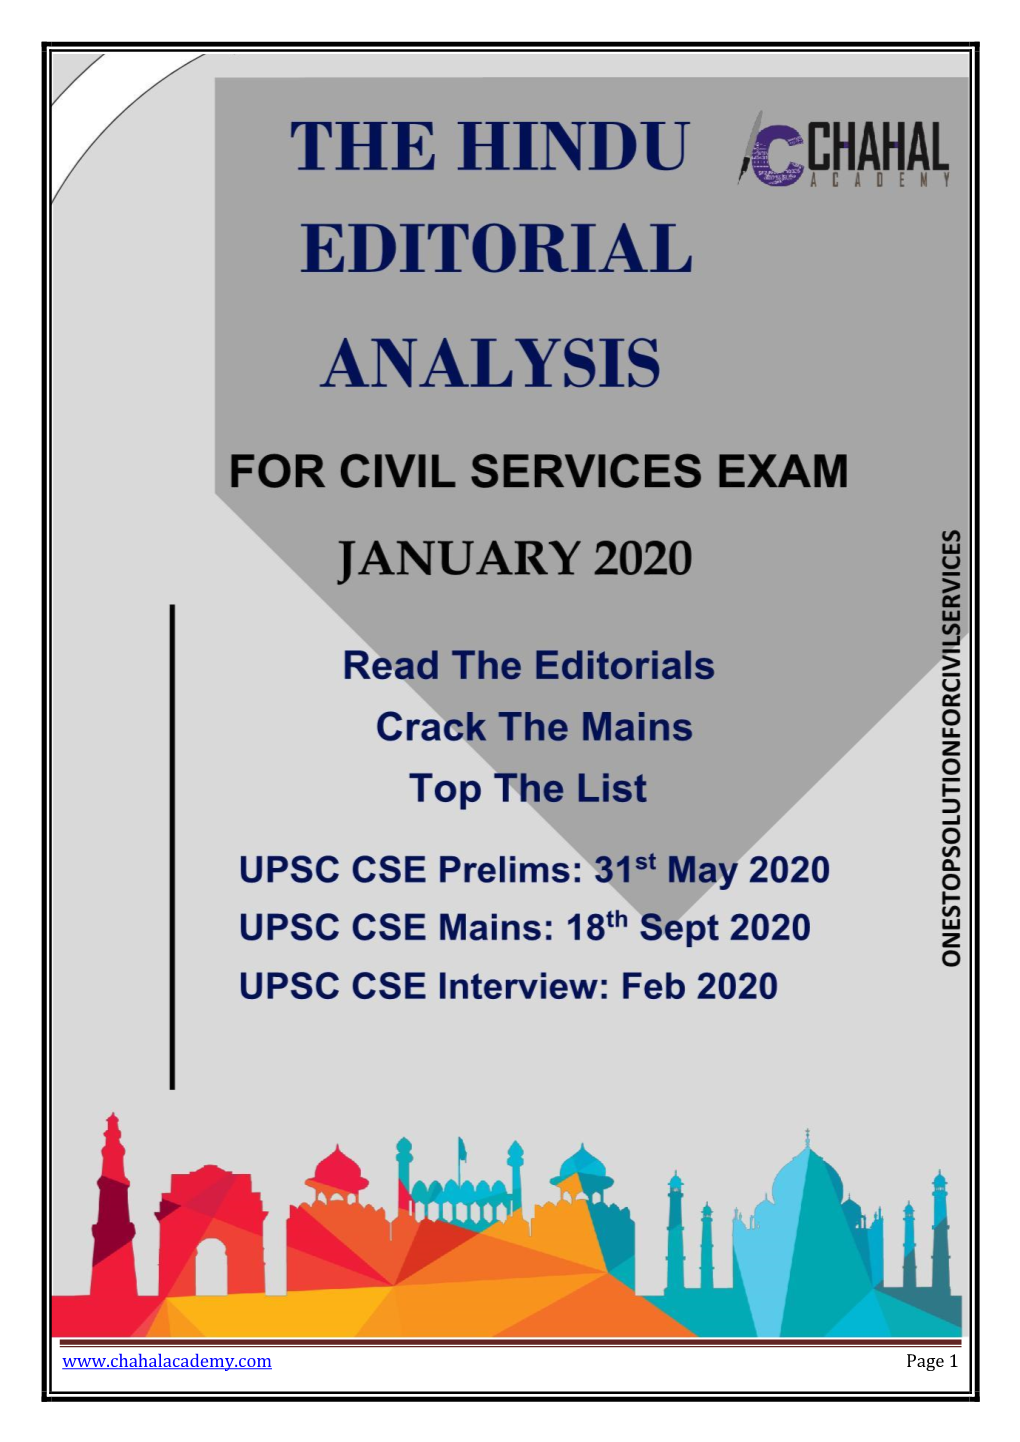 The Hindu Editorial Analysis January 2020